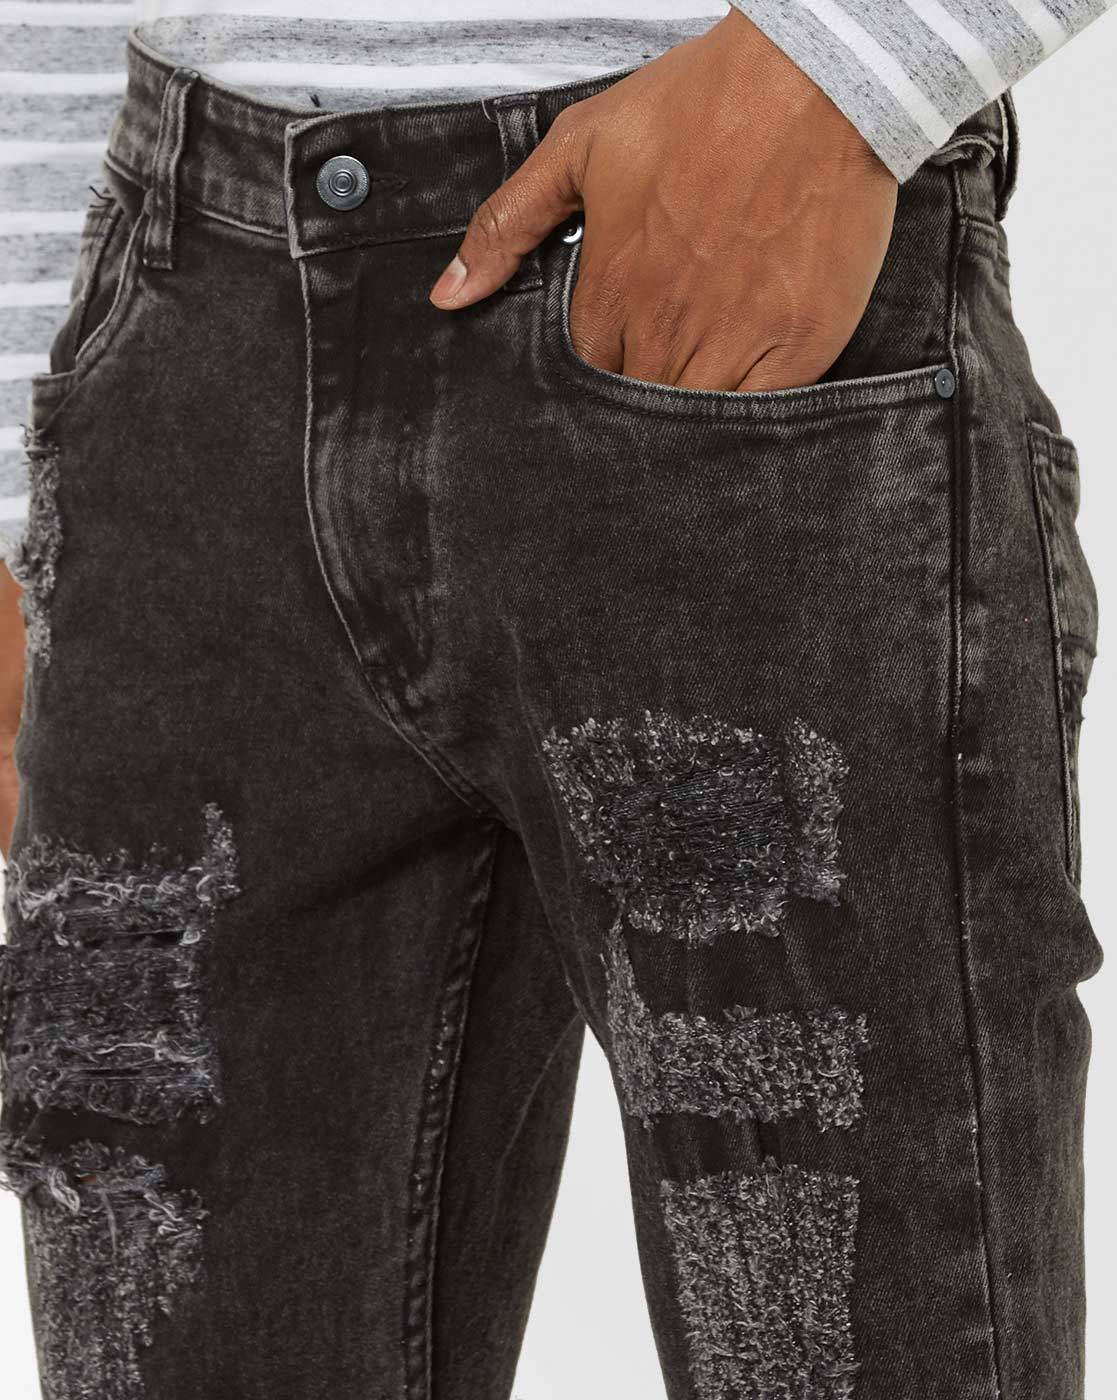 Buy Black Jeans for Men by Blue Saint Online